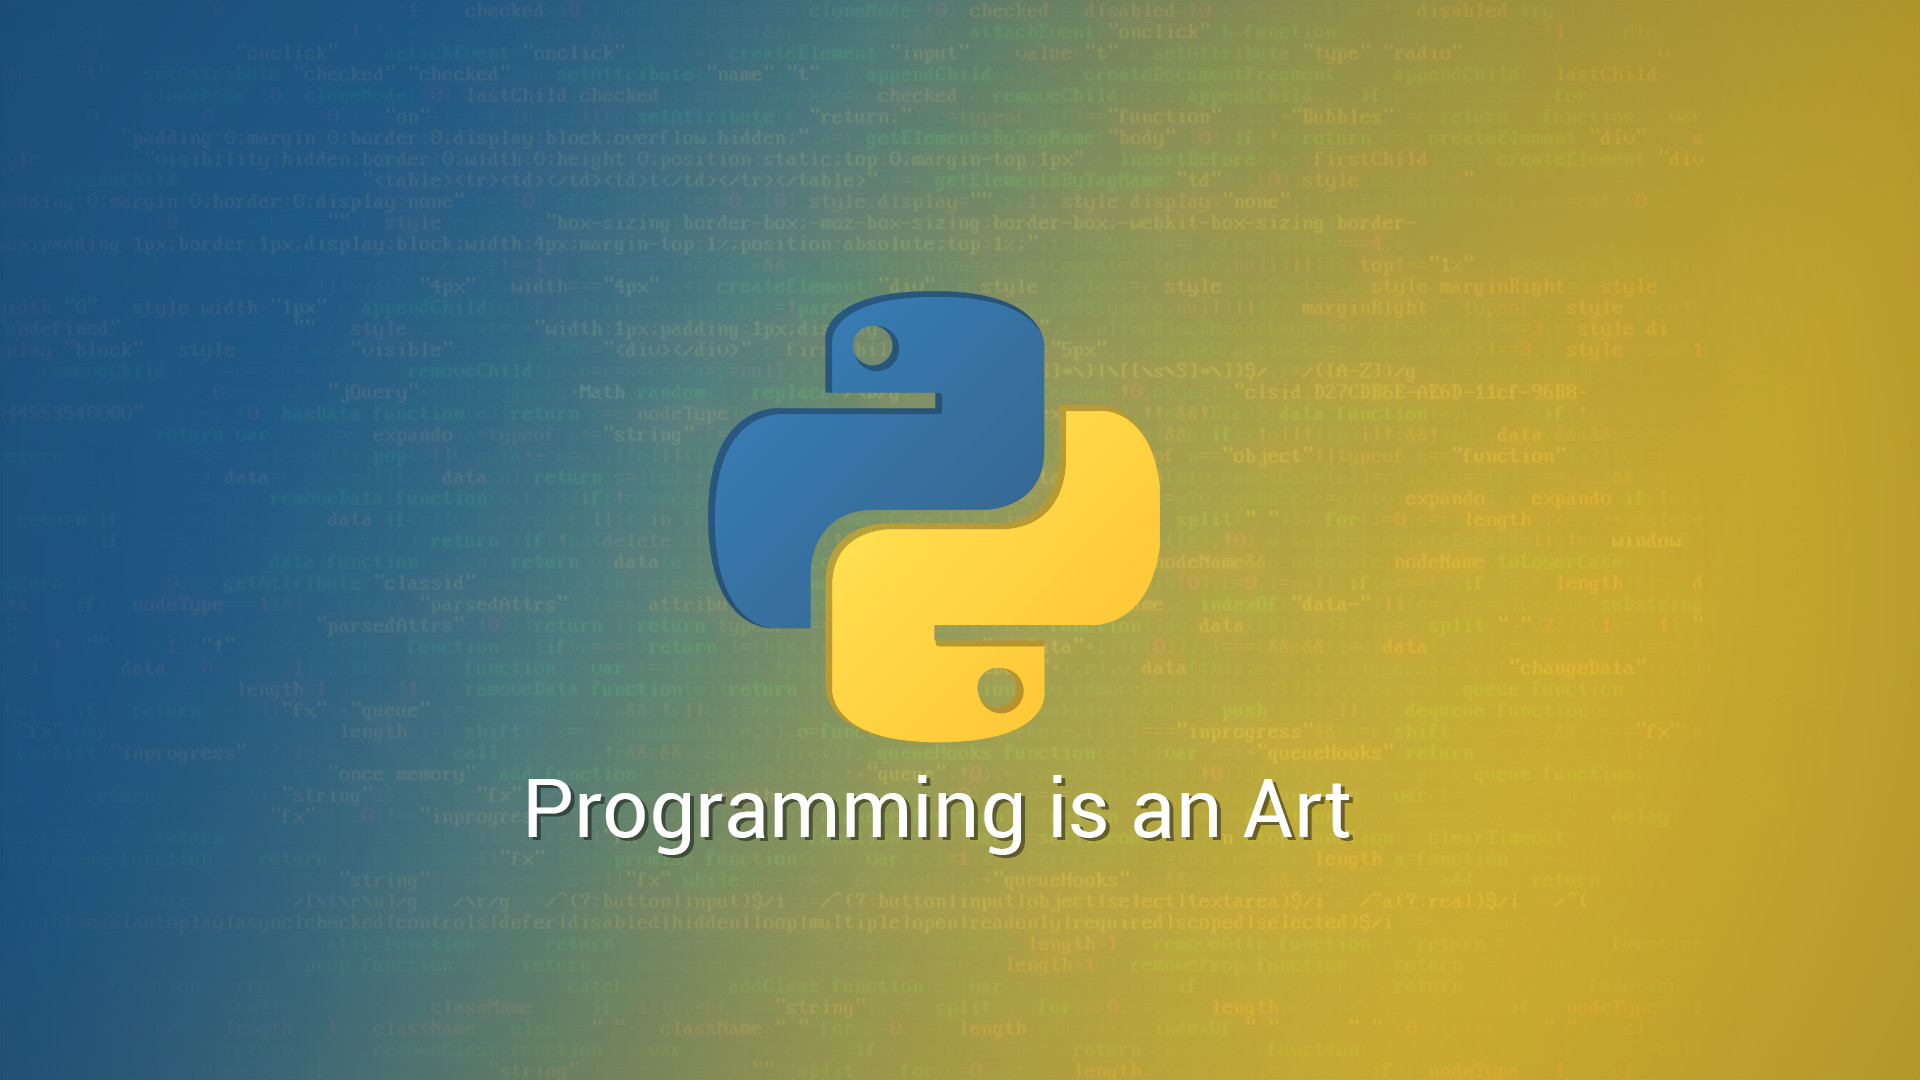 Python Programming Wallpaper Image